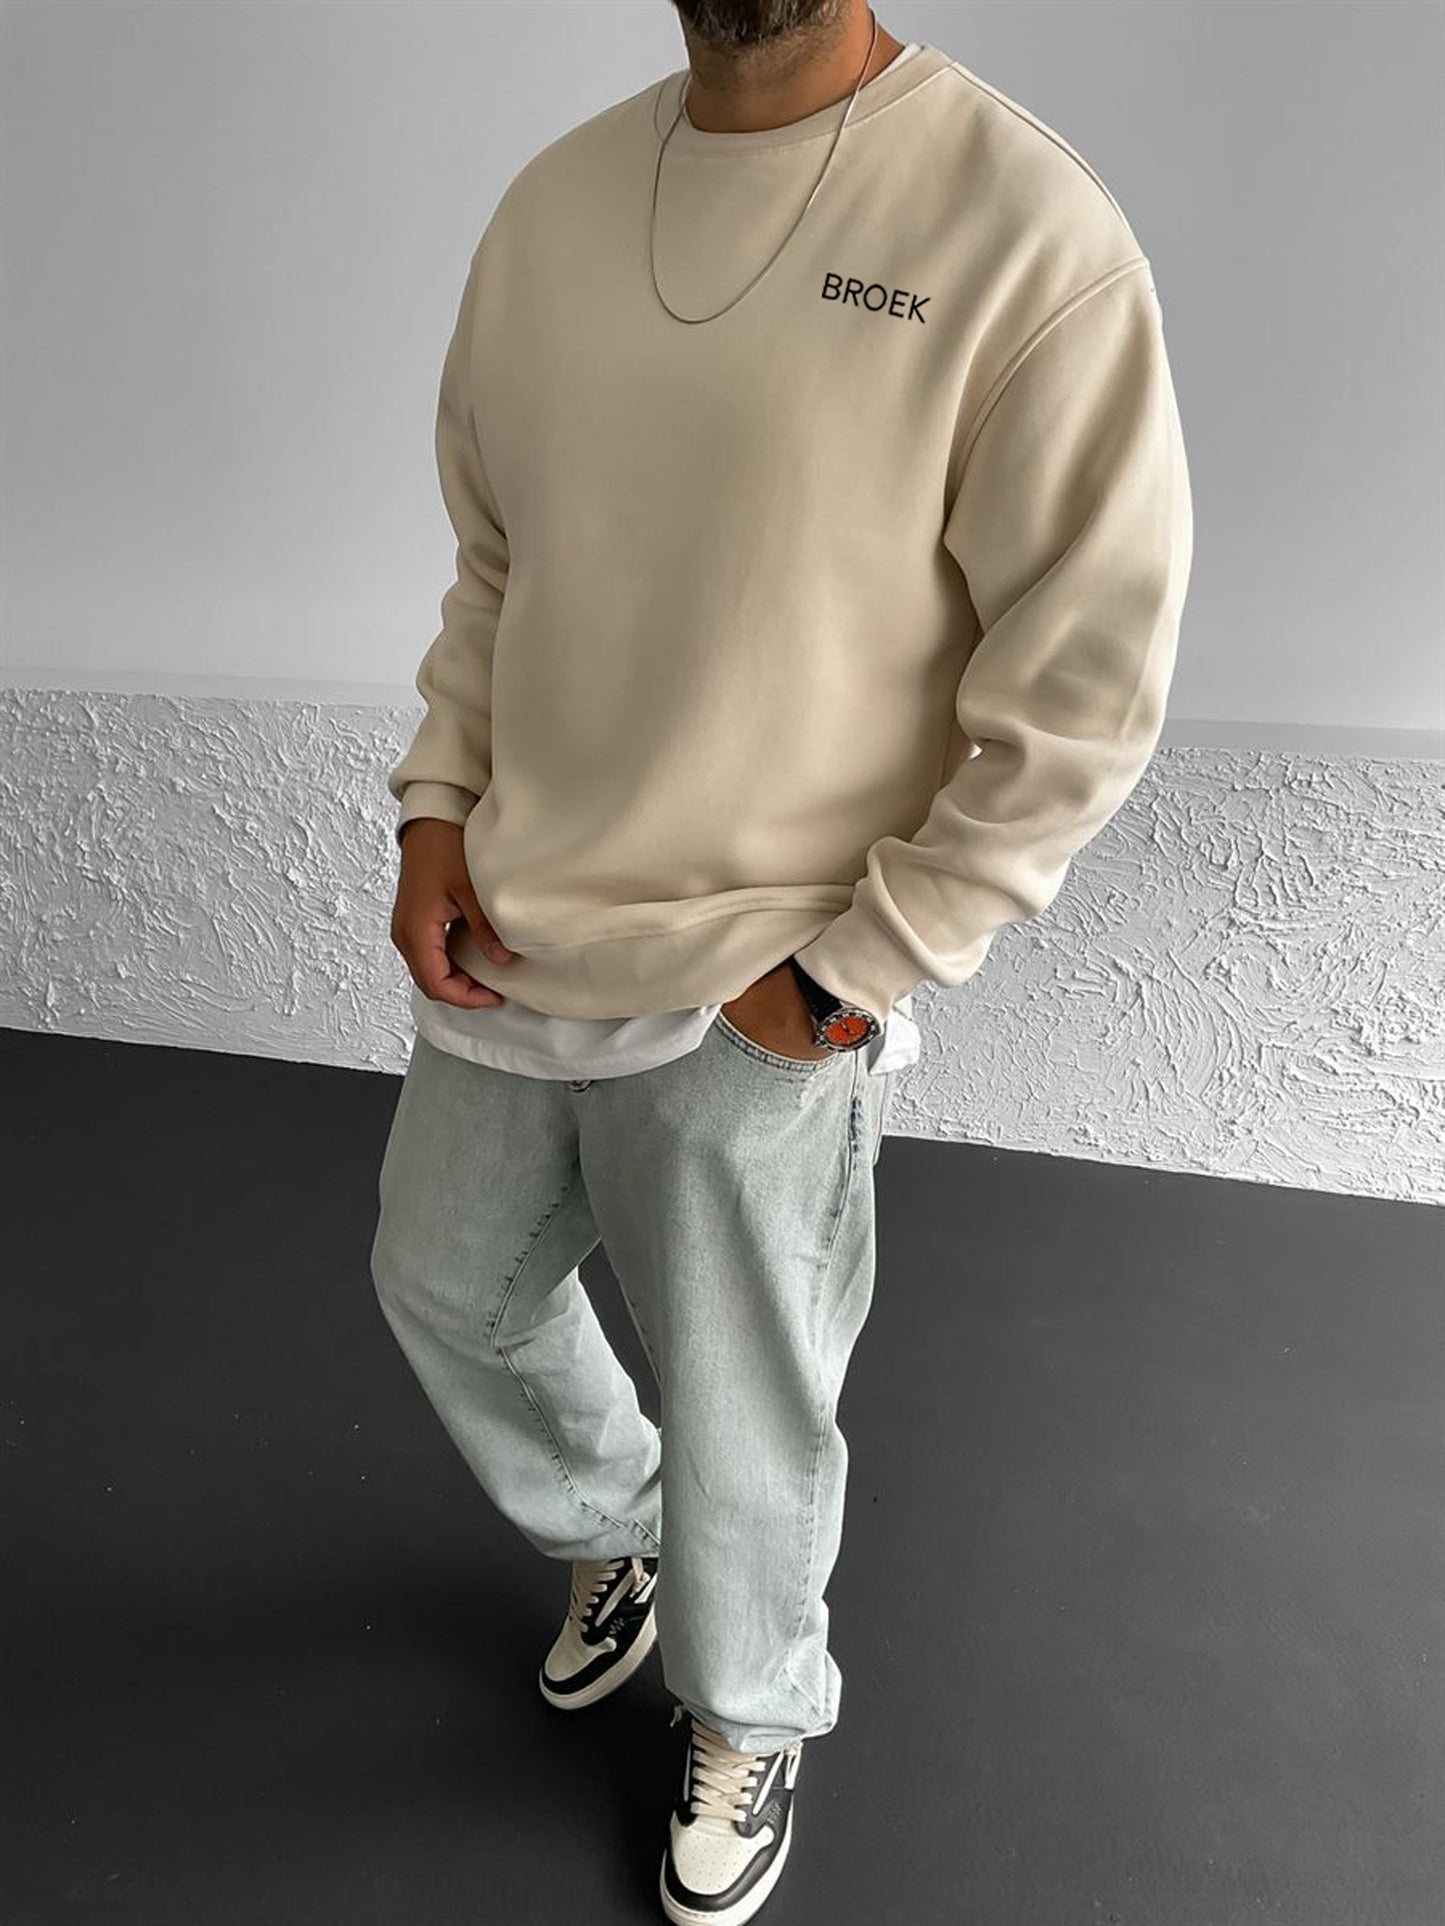 Beige "Not-Basic" Printed Oversize Sweatshirt